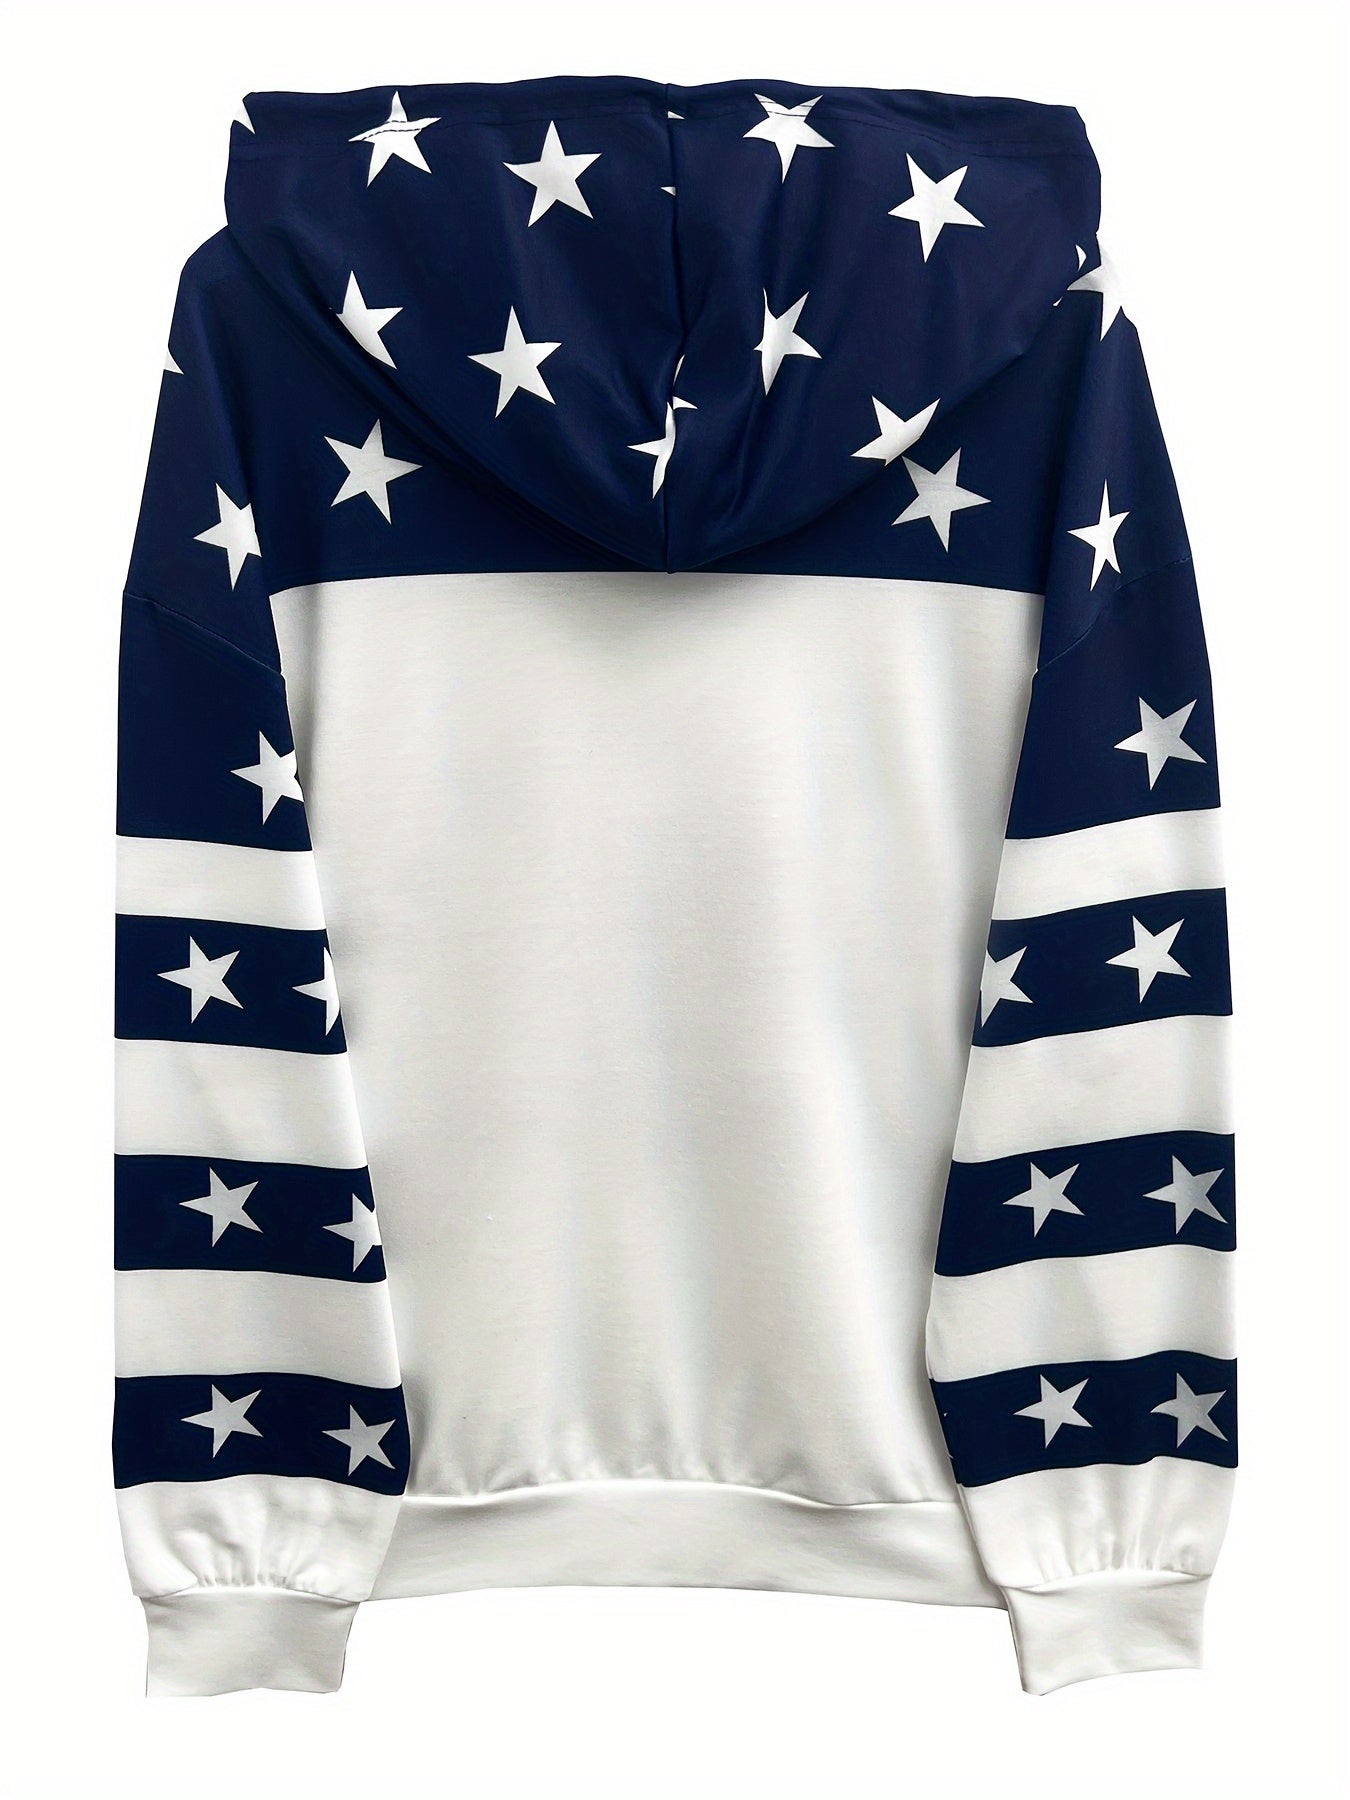 America Needs Jesus Patriotic American Flag Plus Size Women's Christian Pullover Hooded Sweatshirt claimedbygoddesigns